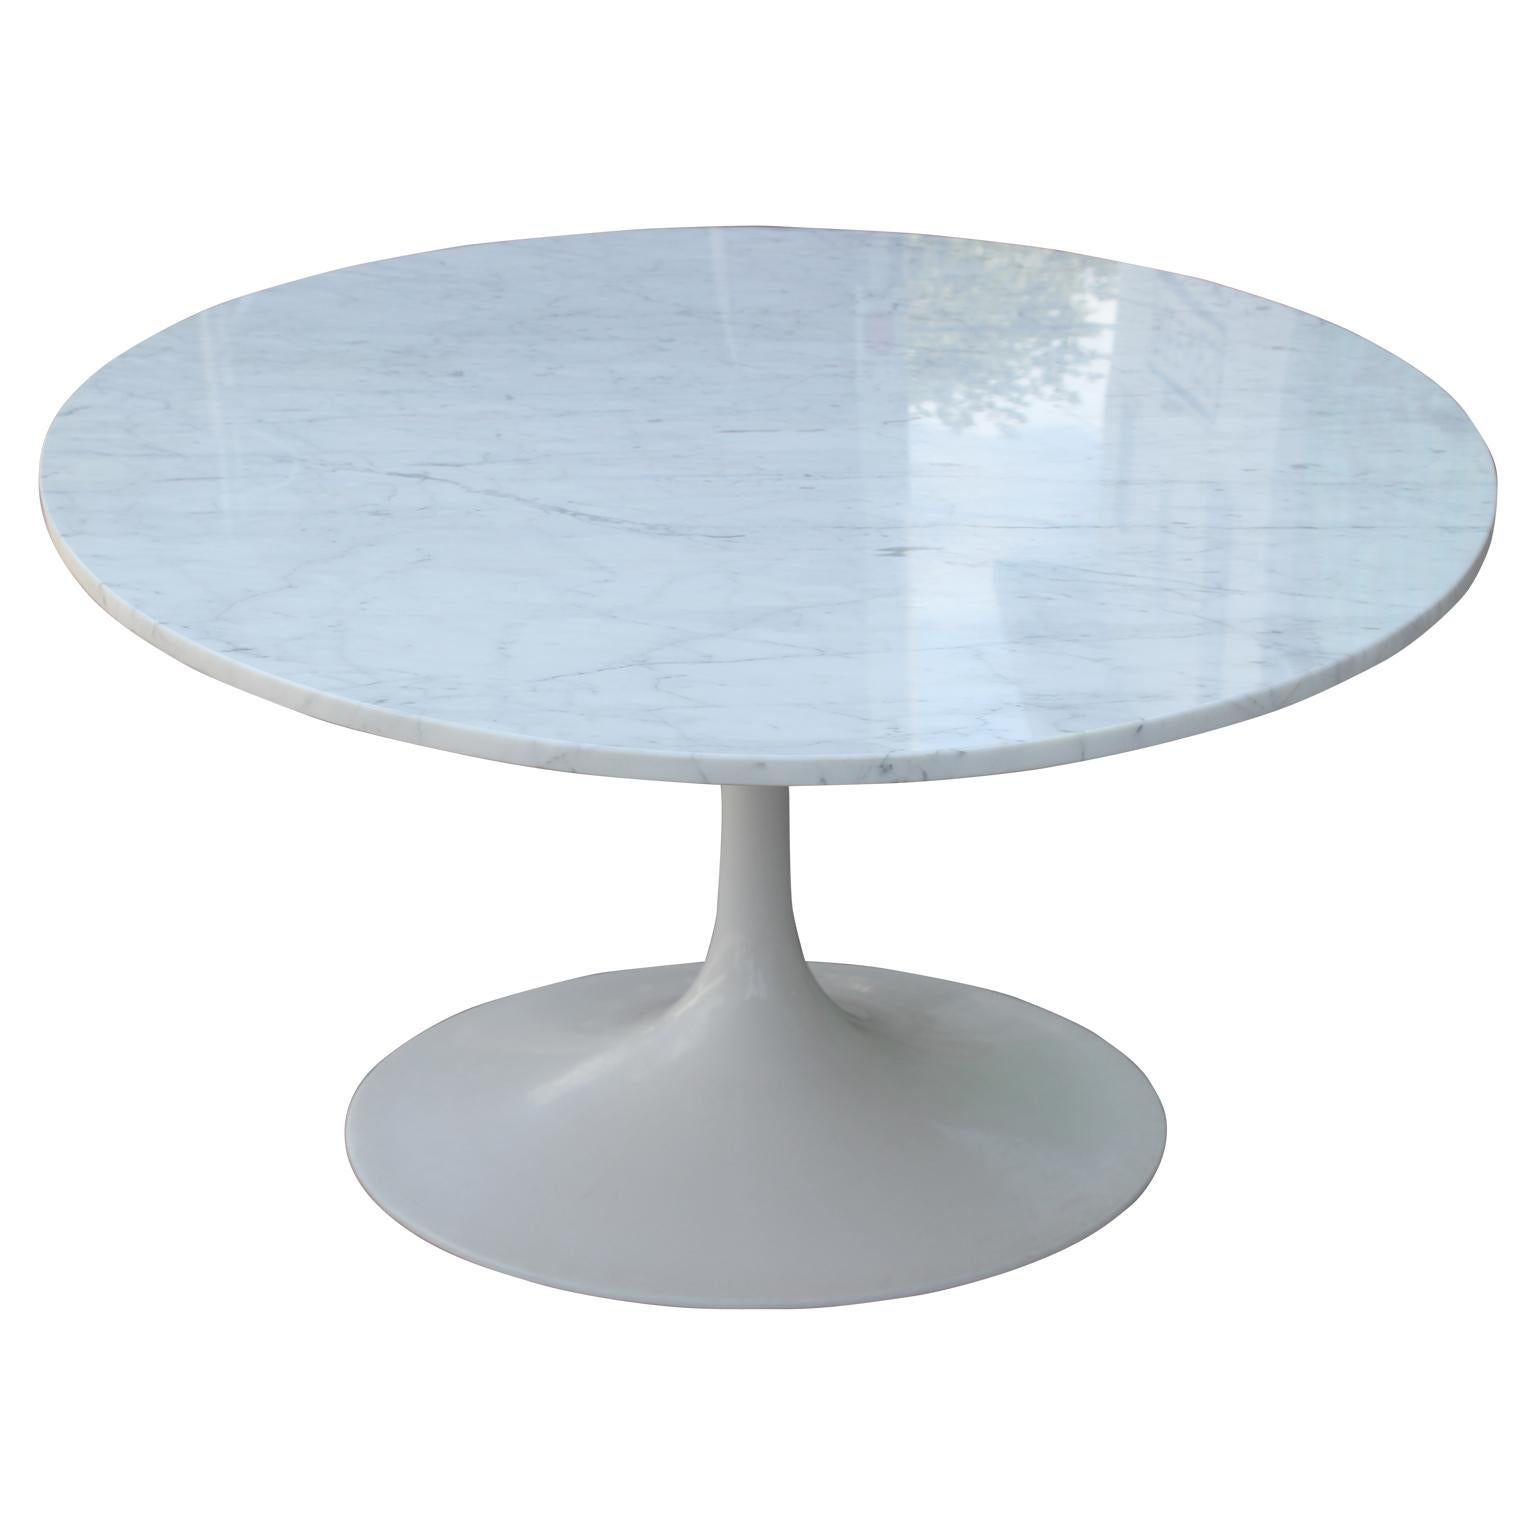 20th Century Modern Maurice Burke Saarinen Style Table with an Oval Carrara Marble Top